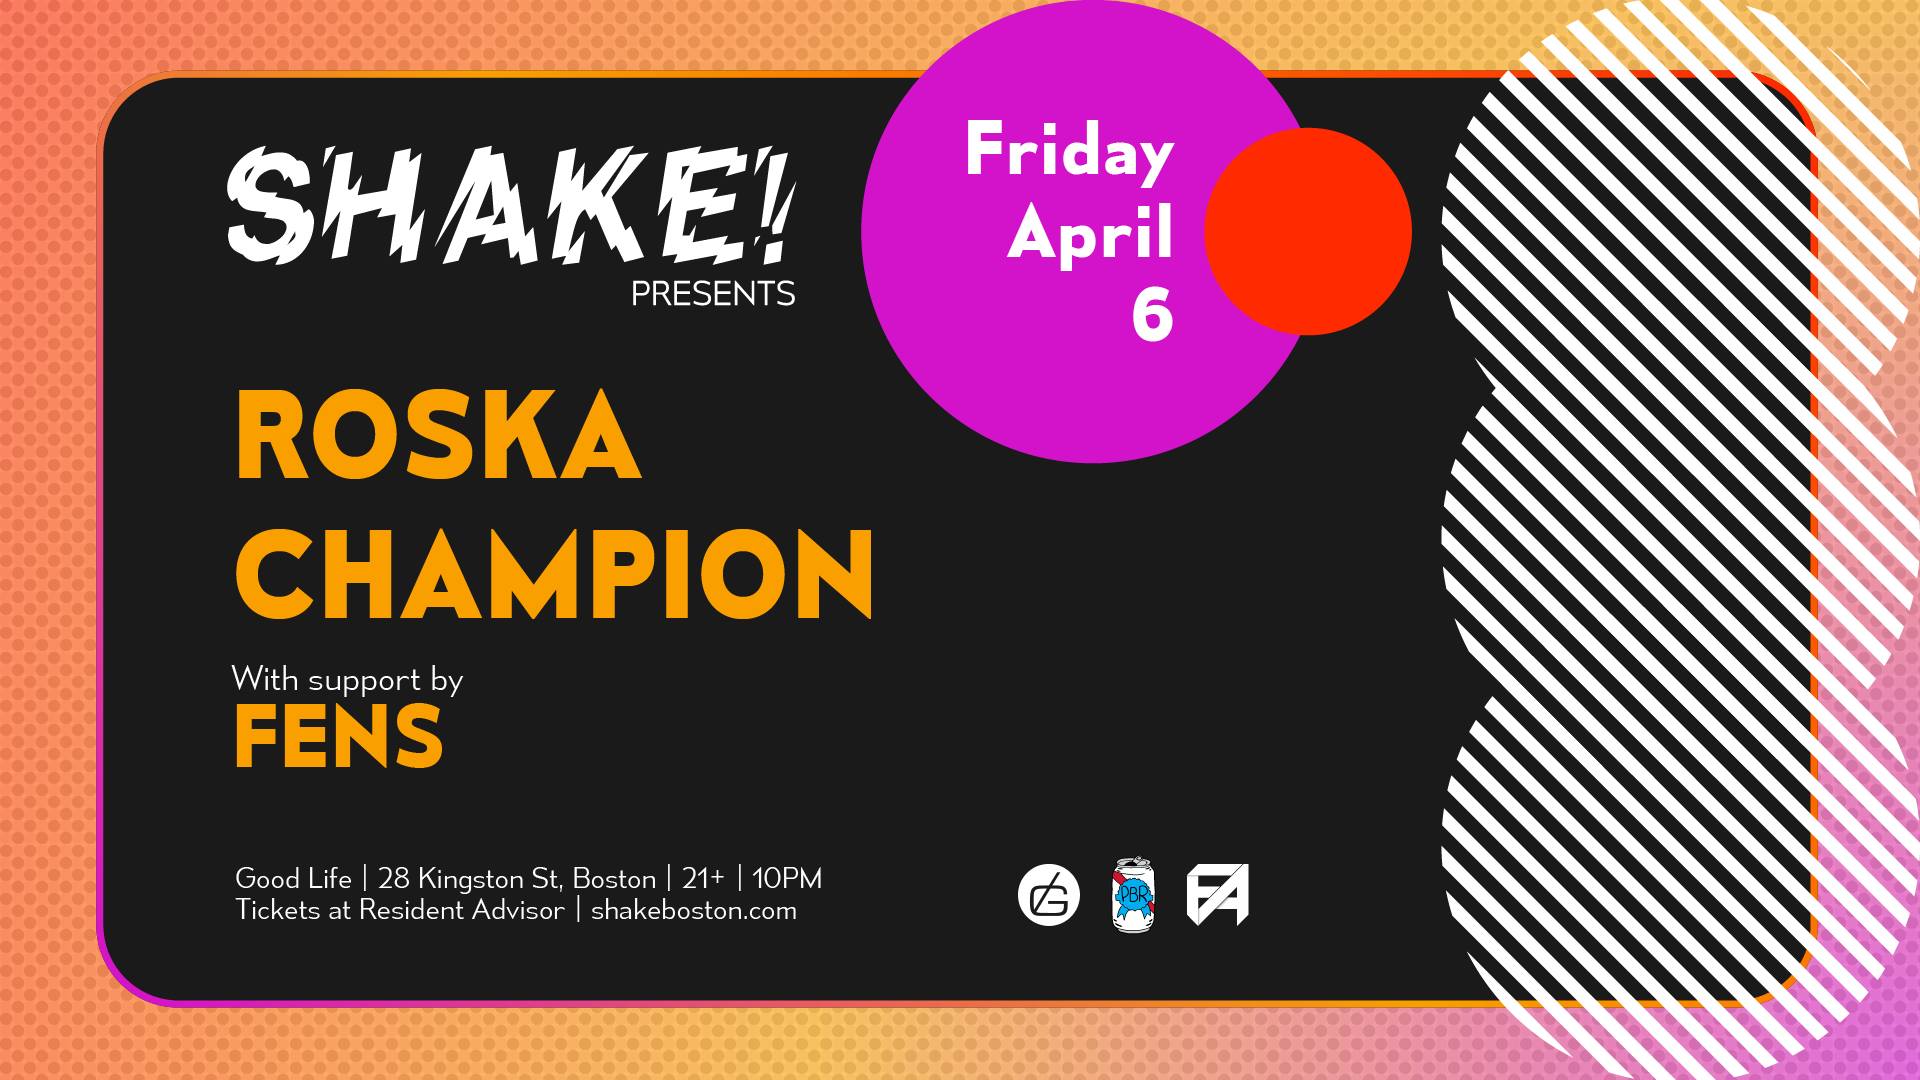 Roska, Champion, and Fens - Shake - April 6, 2018 @ Good Life